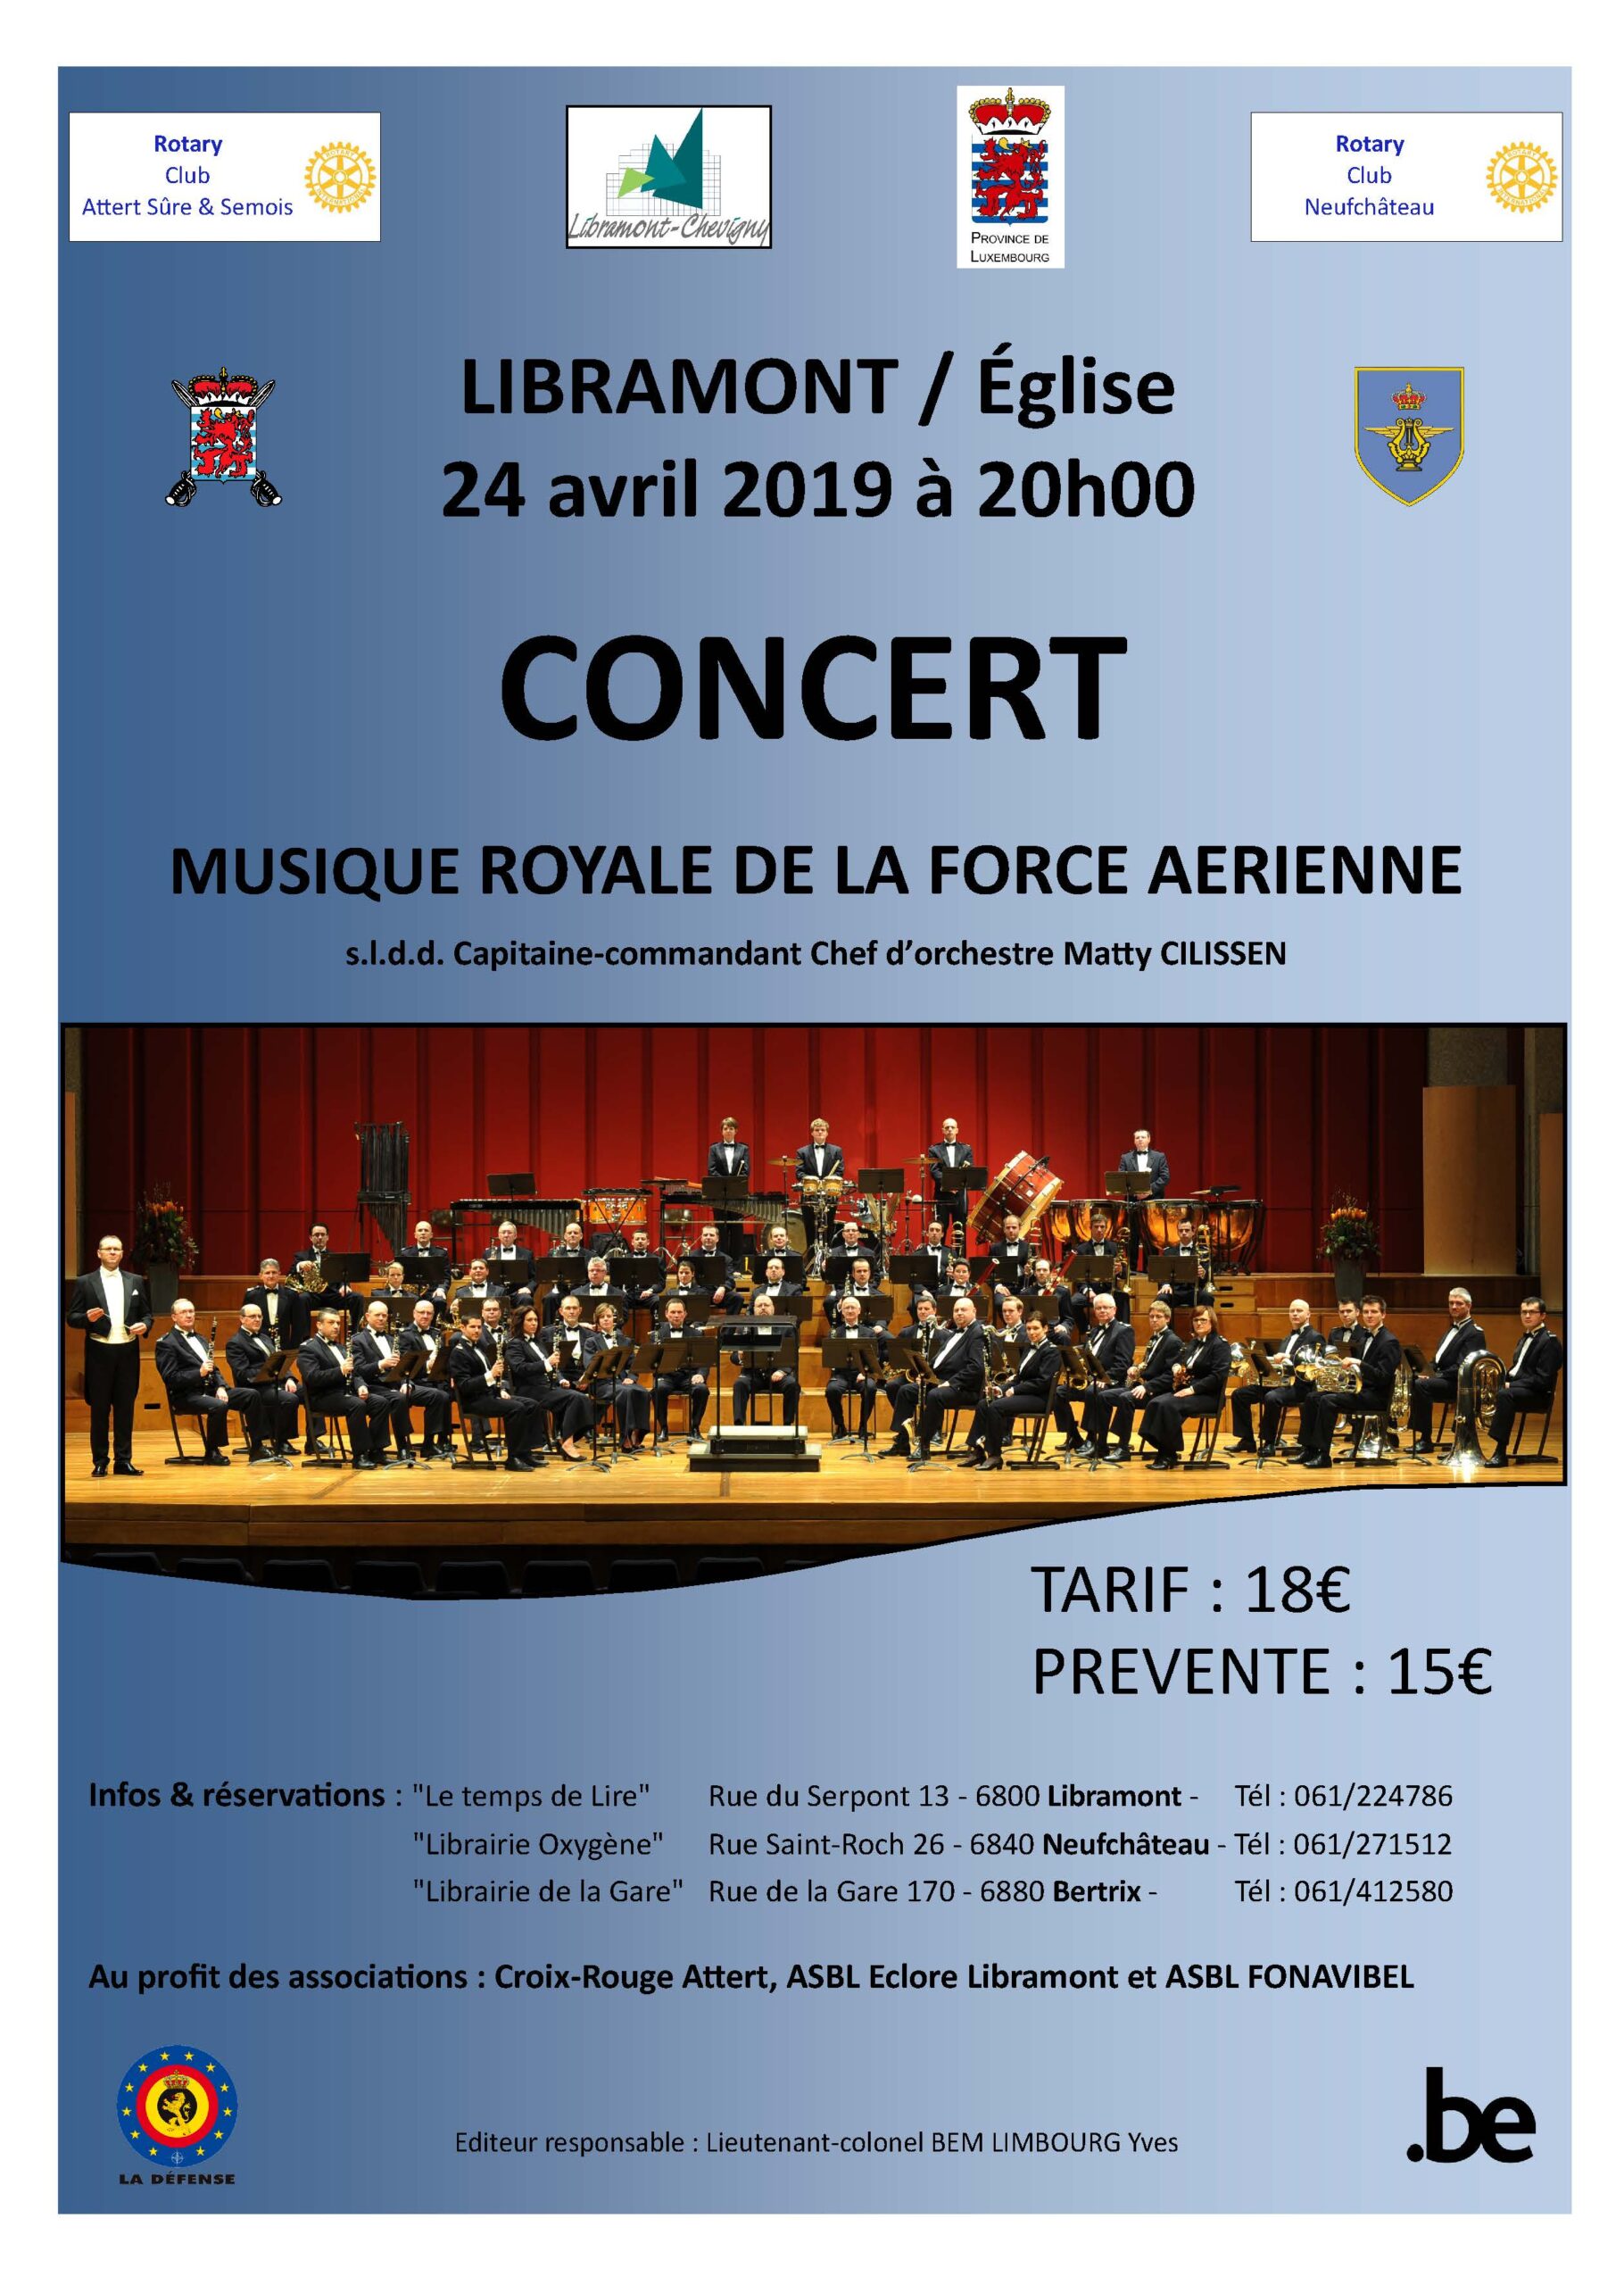  Concert Libramont